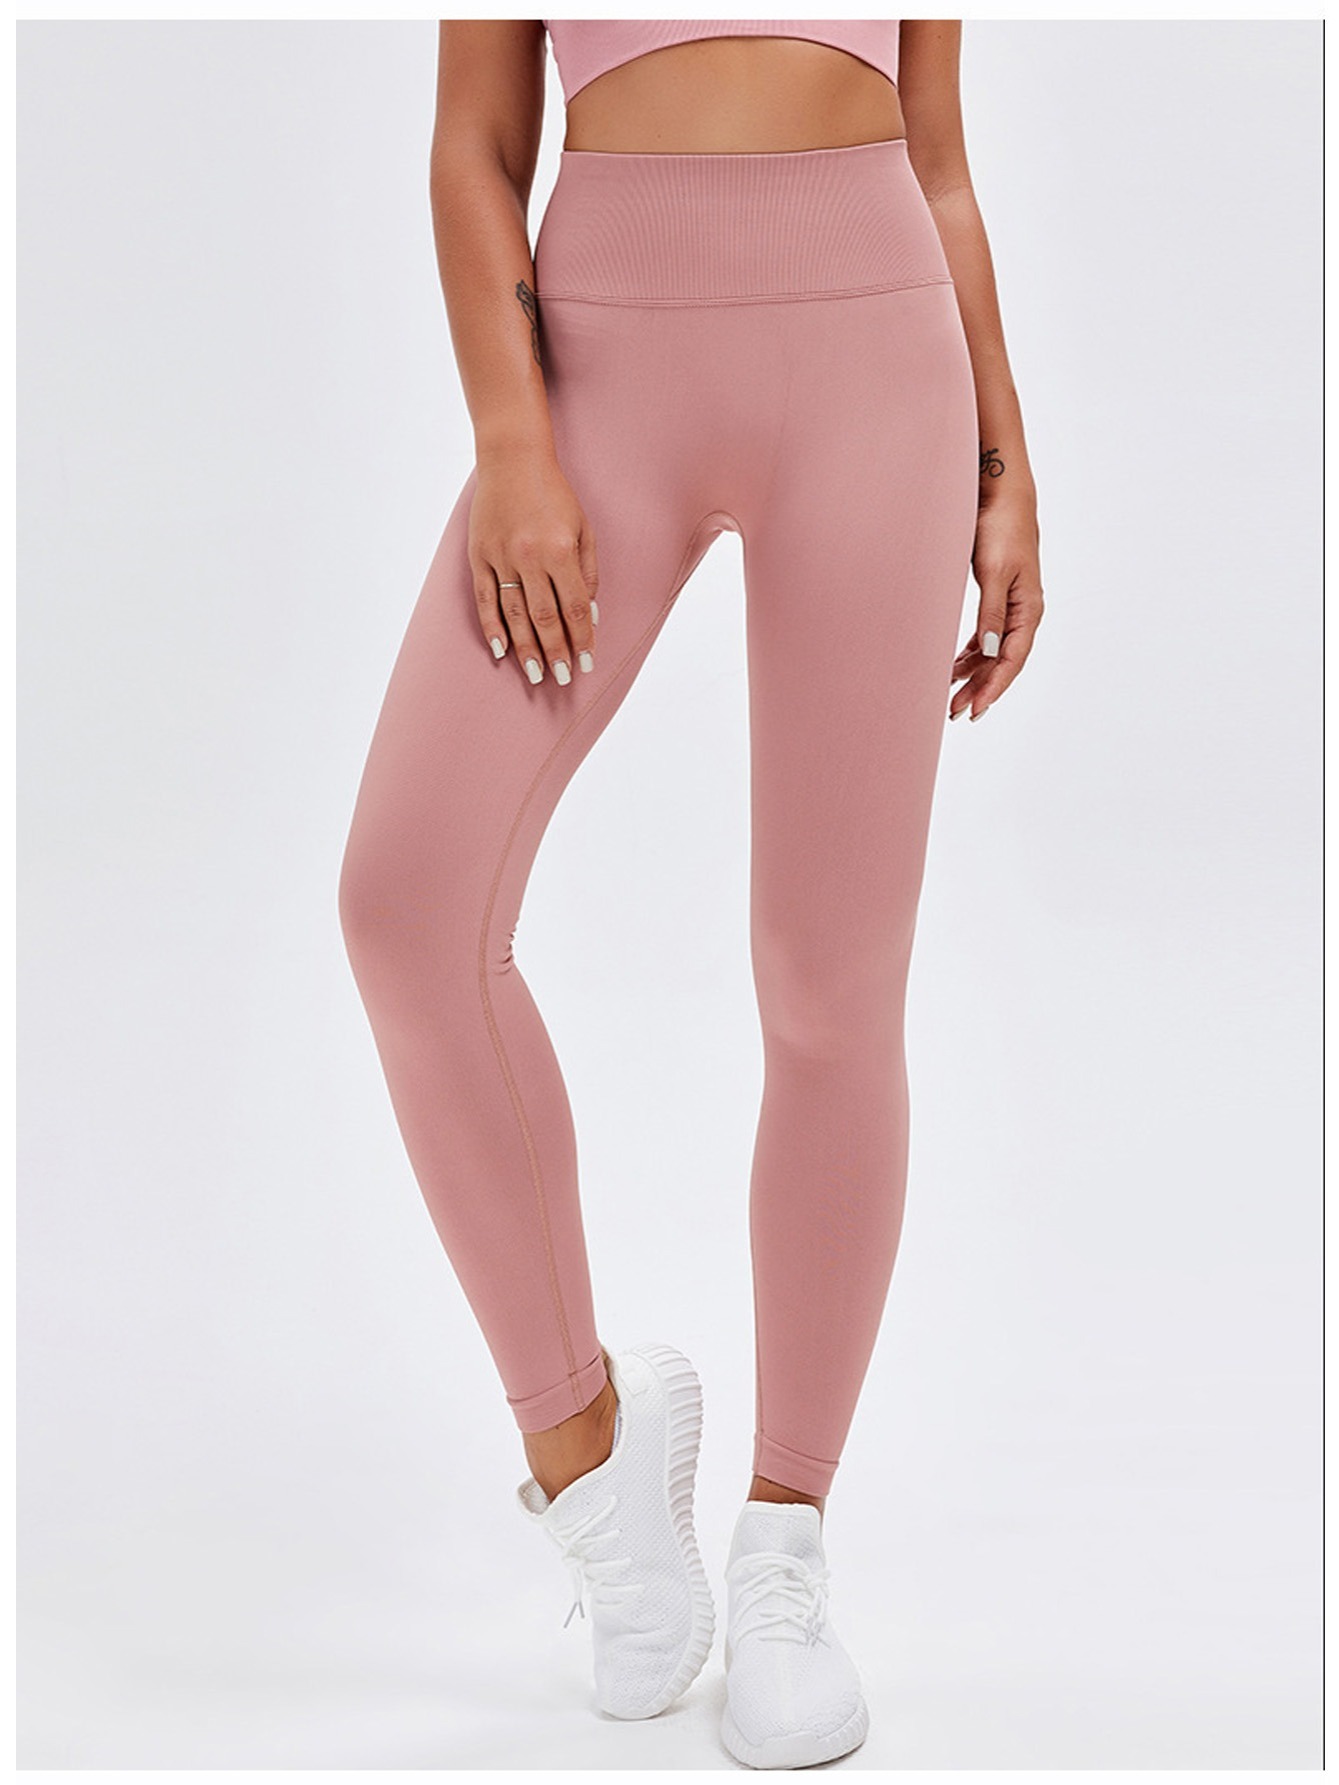 Seamless Legging - Dusty Pink / S  Free leggings, Seamless leggings,  Legging